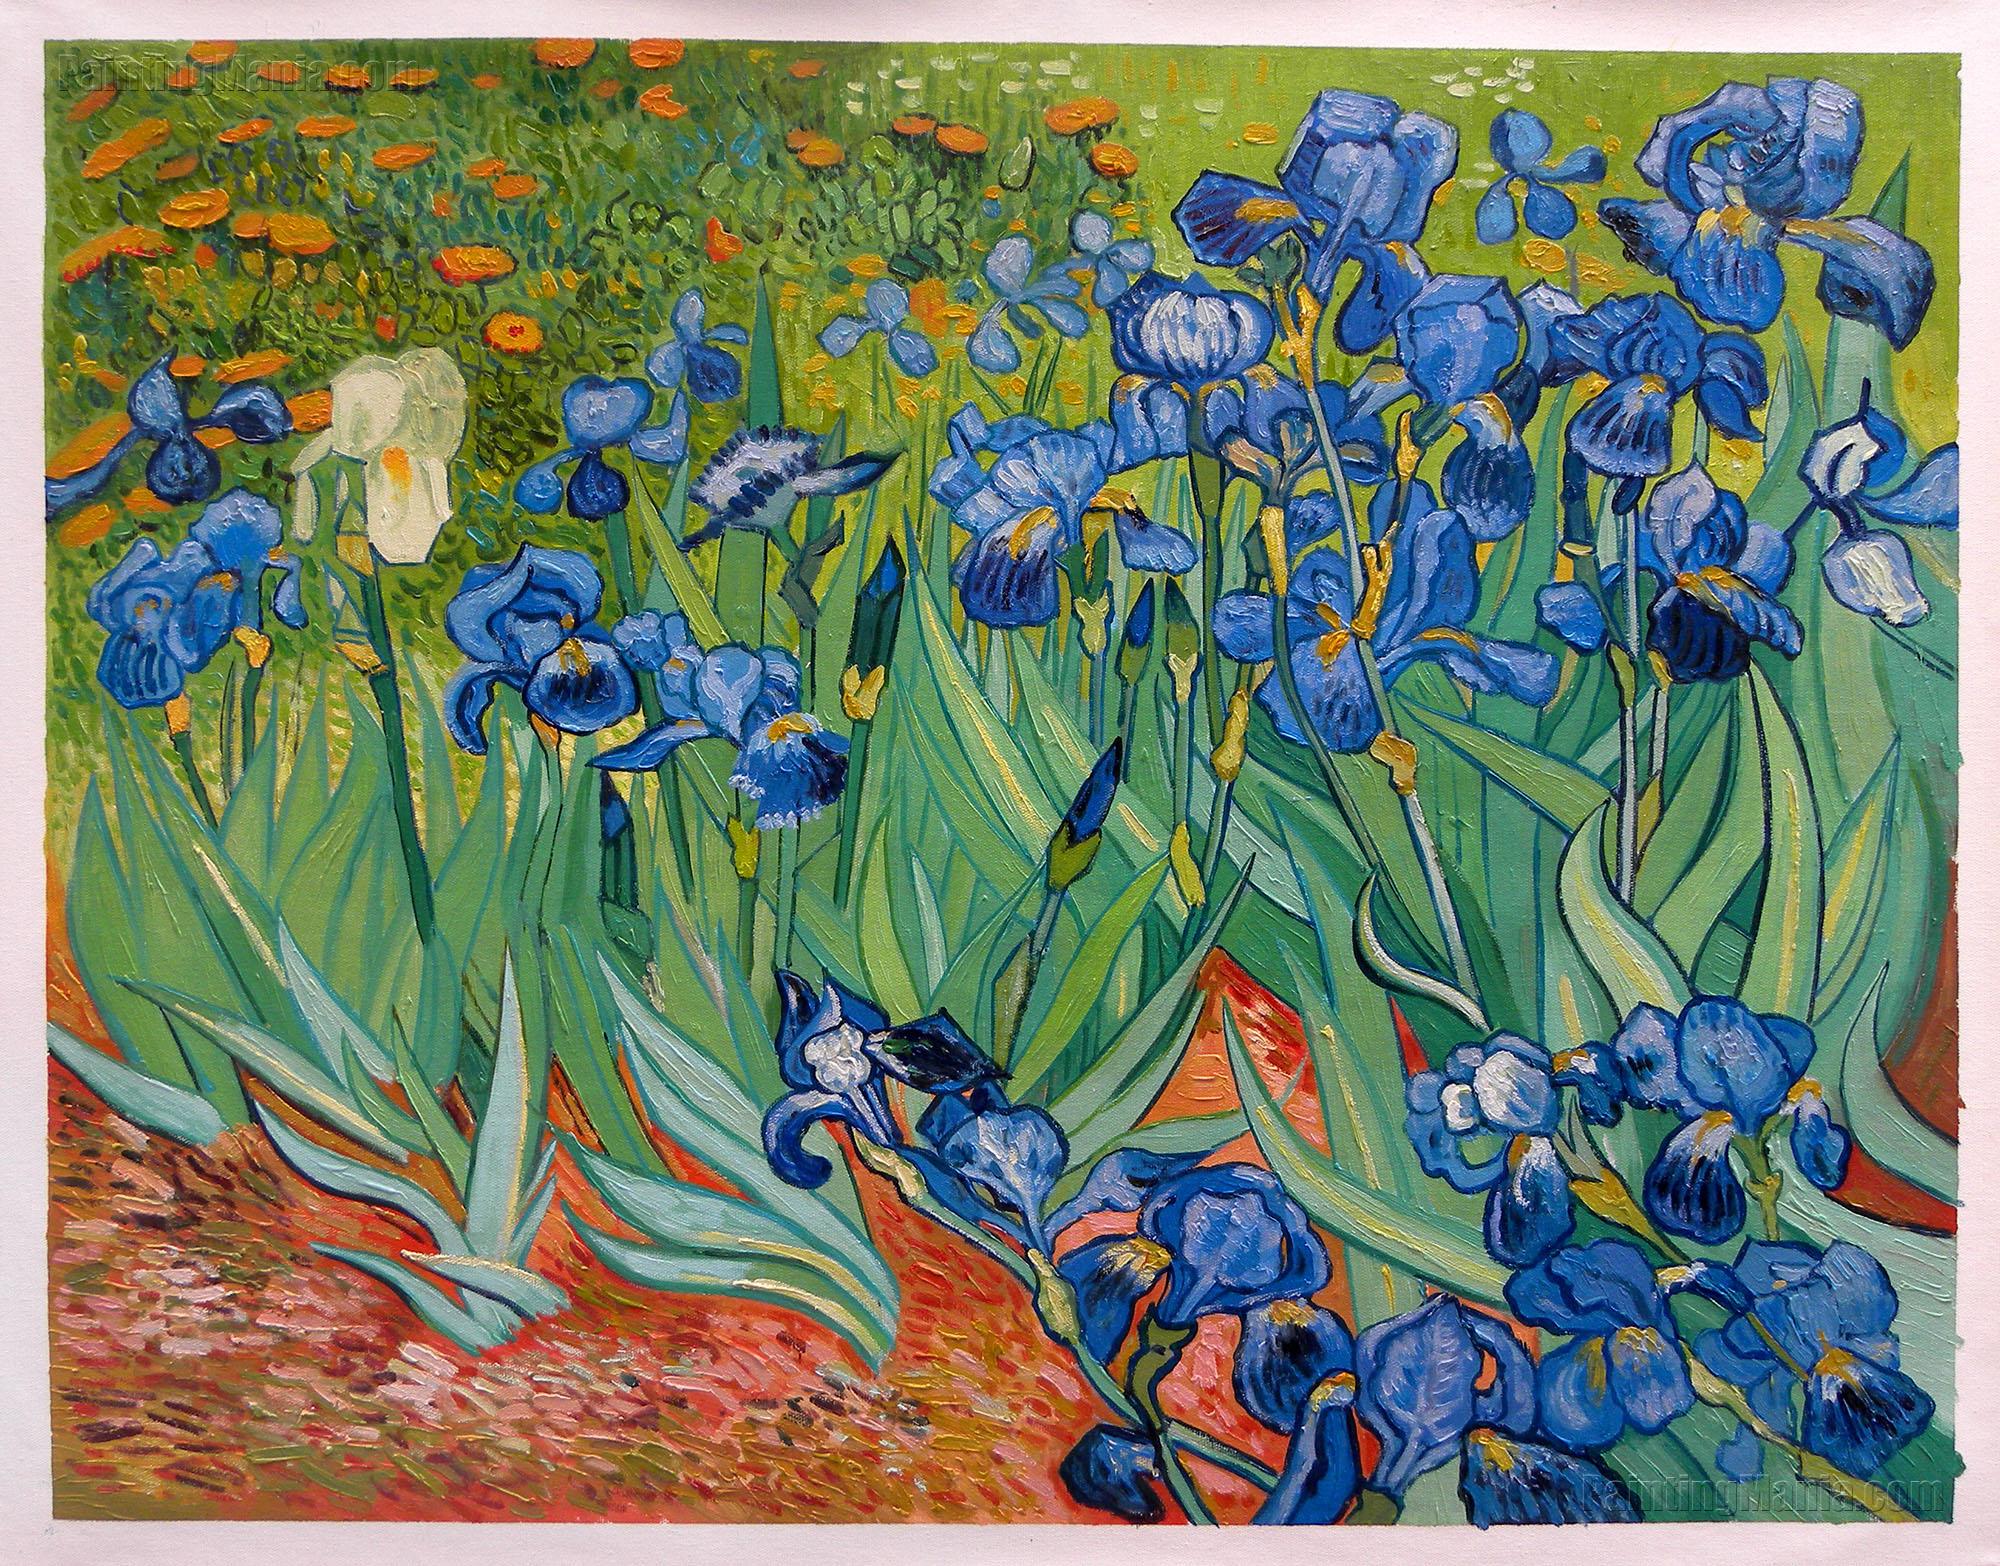 Vincent Van Gogh Irises Painting at PaintingValley.com | Explore ...